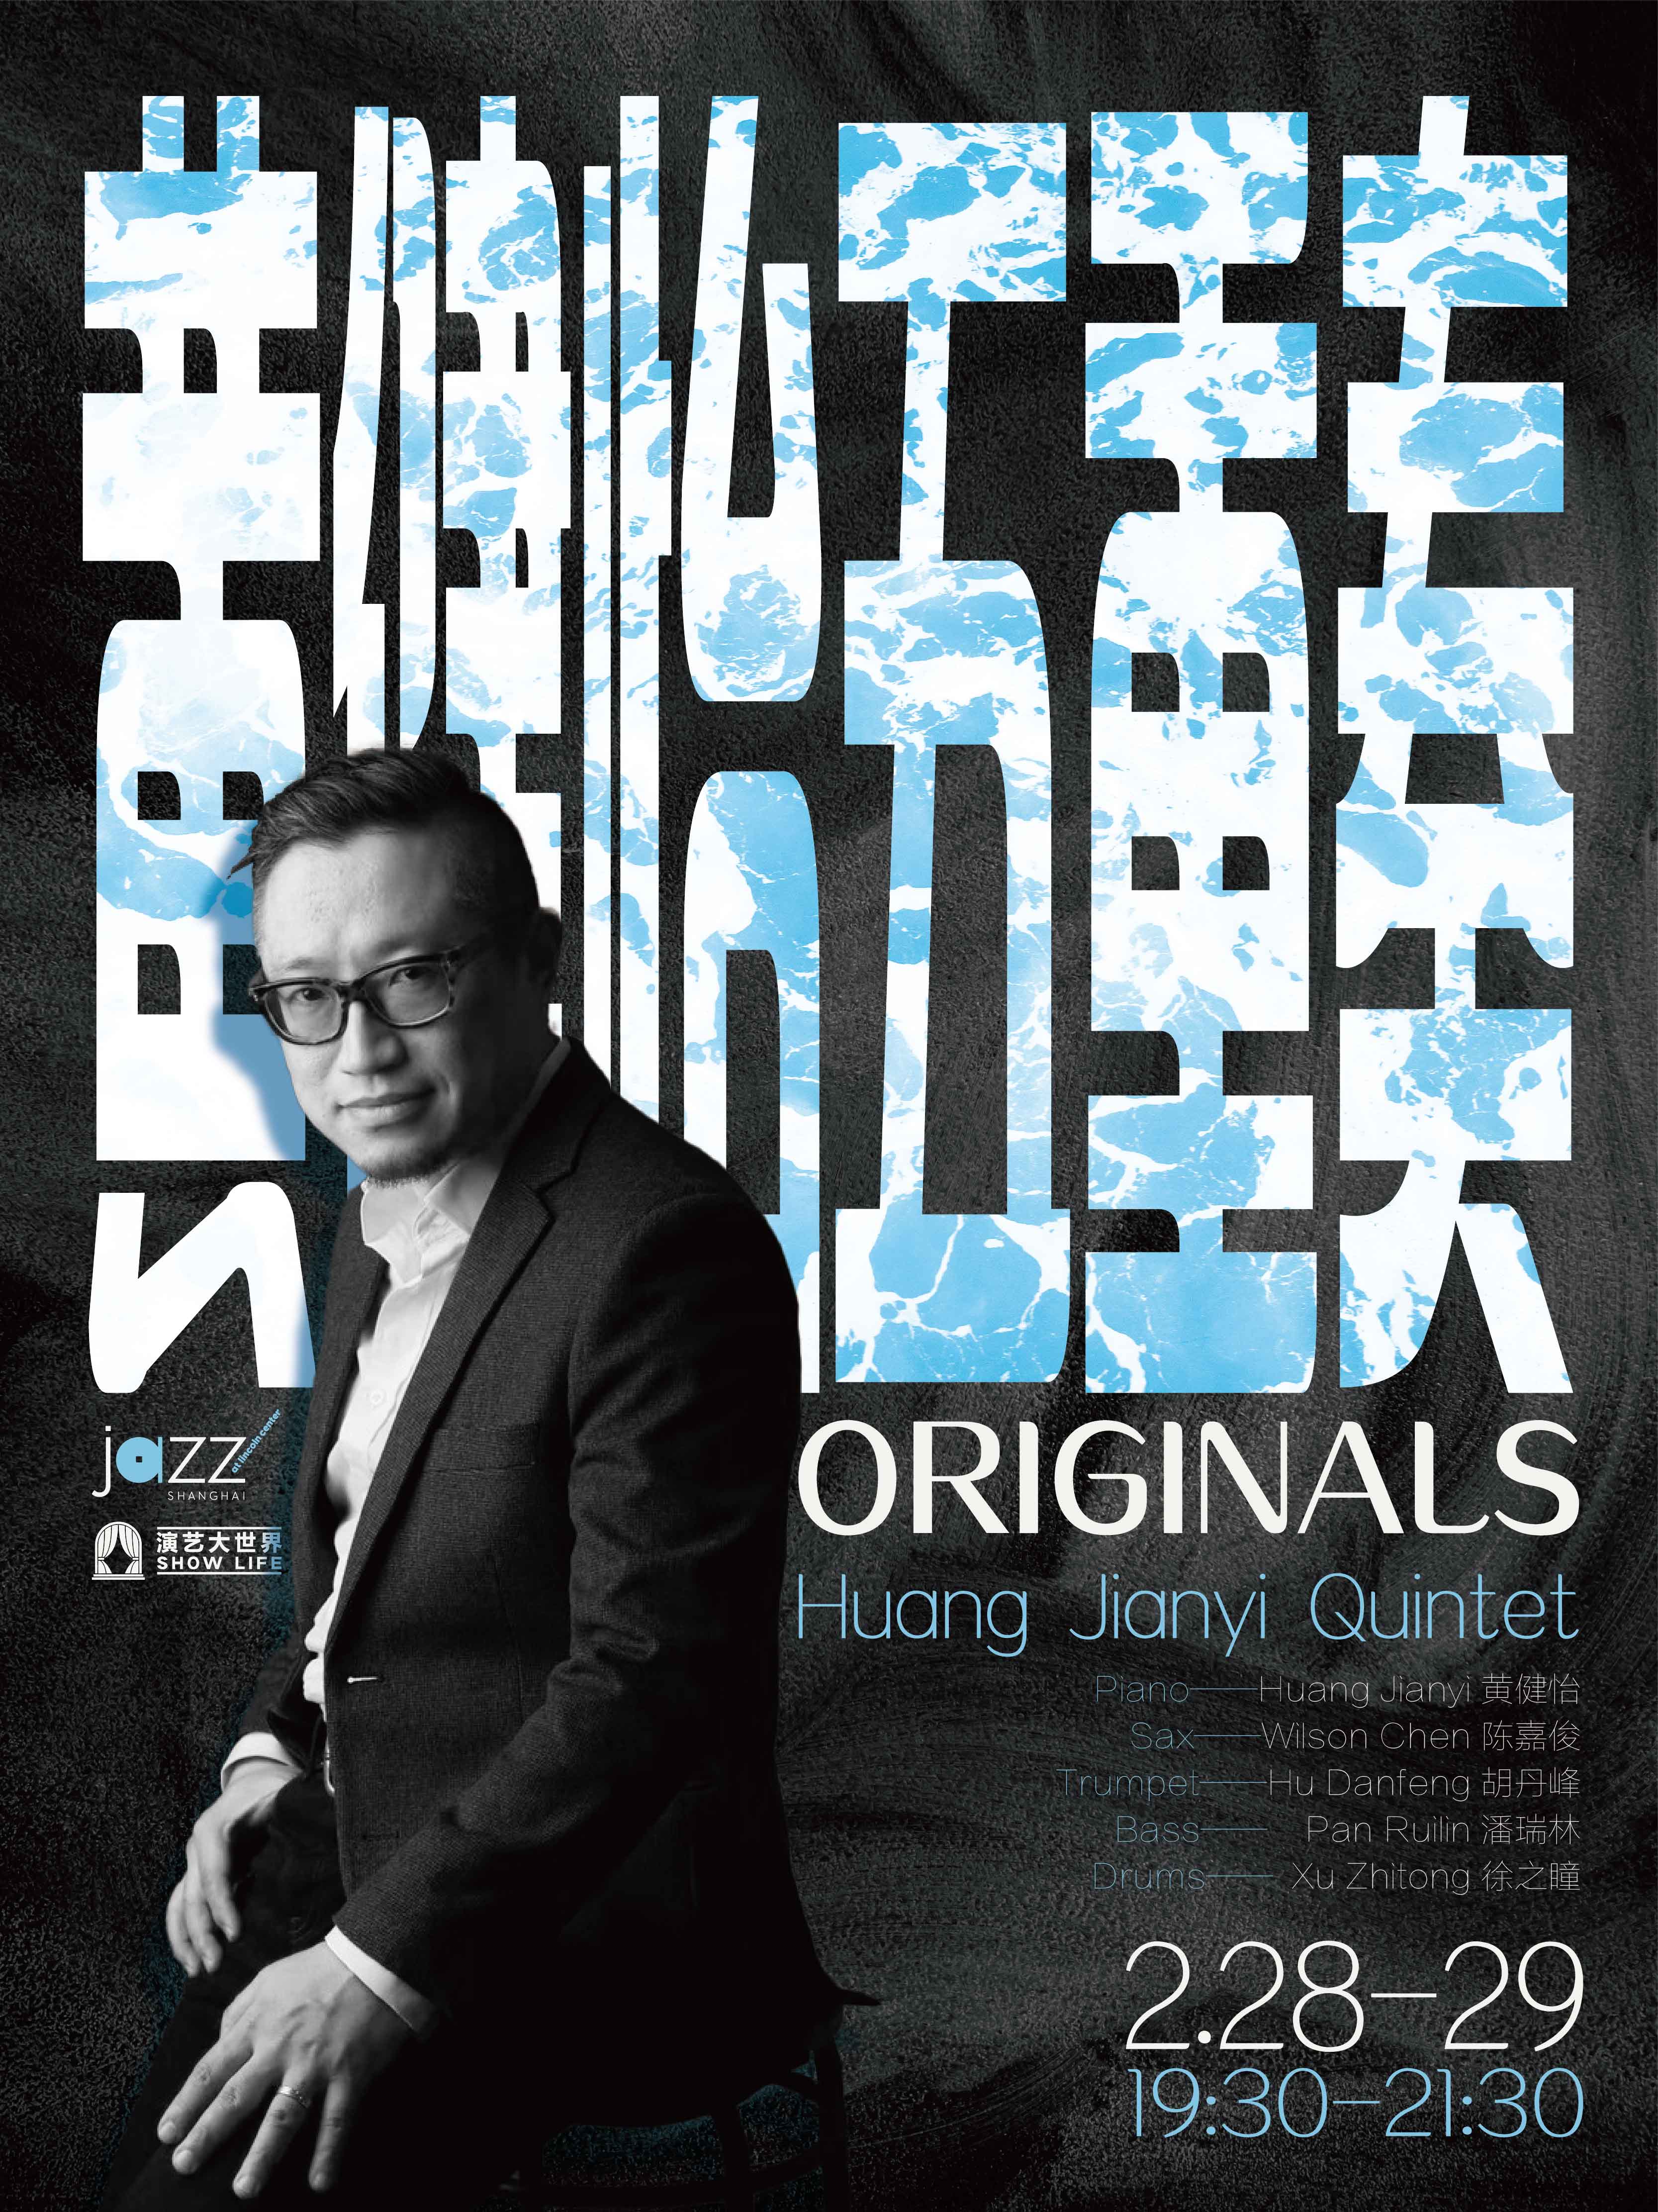 [Jazz @ Lincoln Center Shanghai]  Originals - Huang Jianyi Quintet